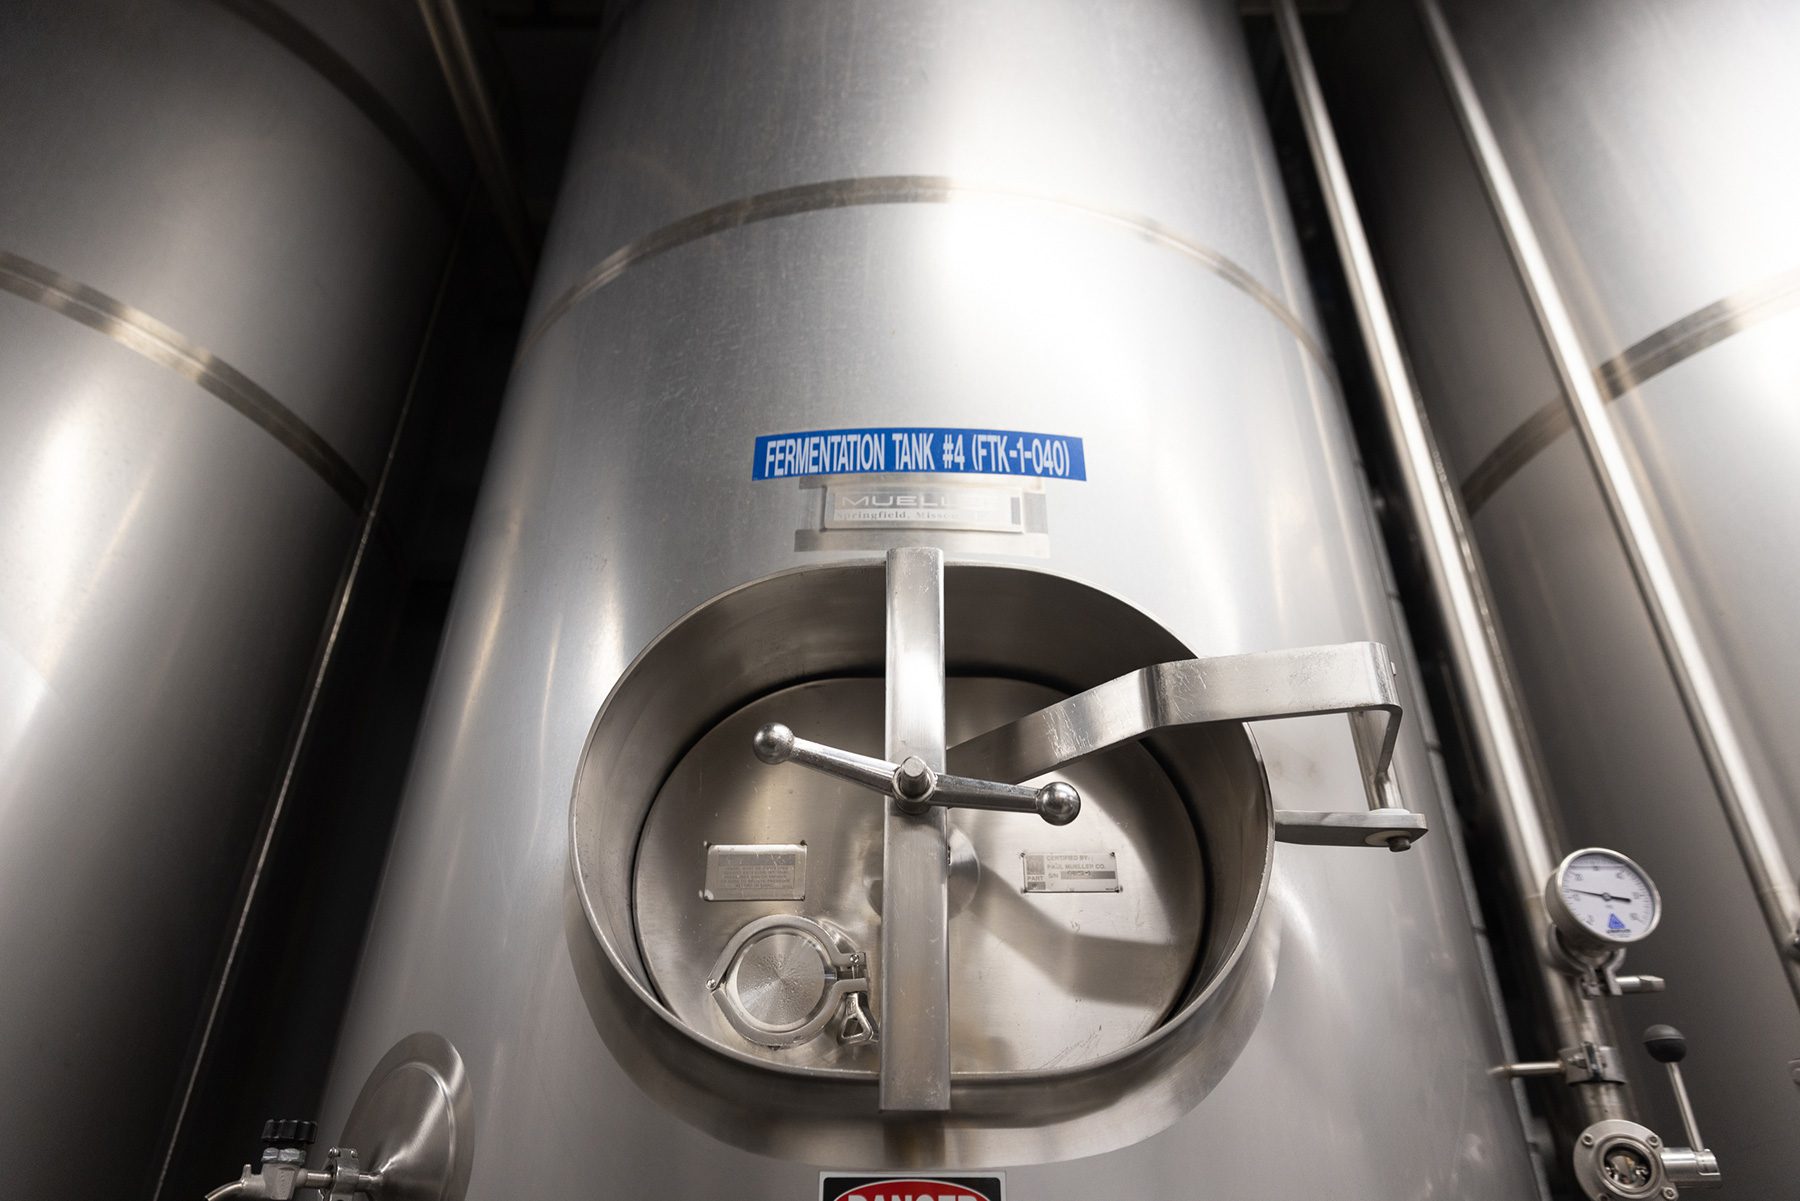 Sierra Nevada pilot brewery fermentation tanks